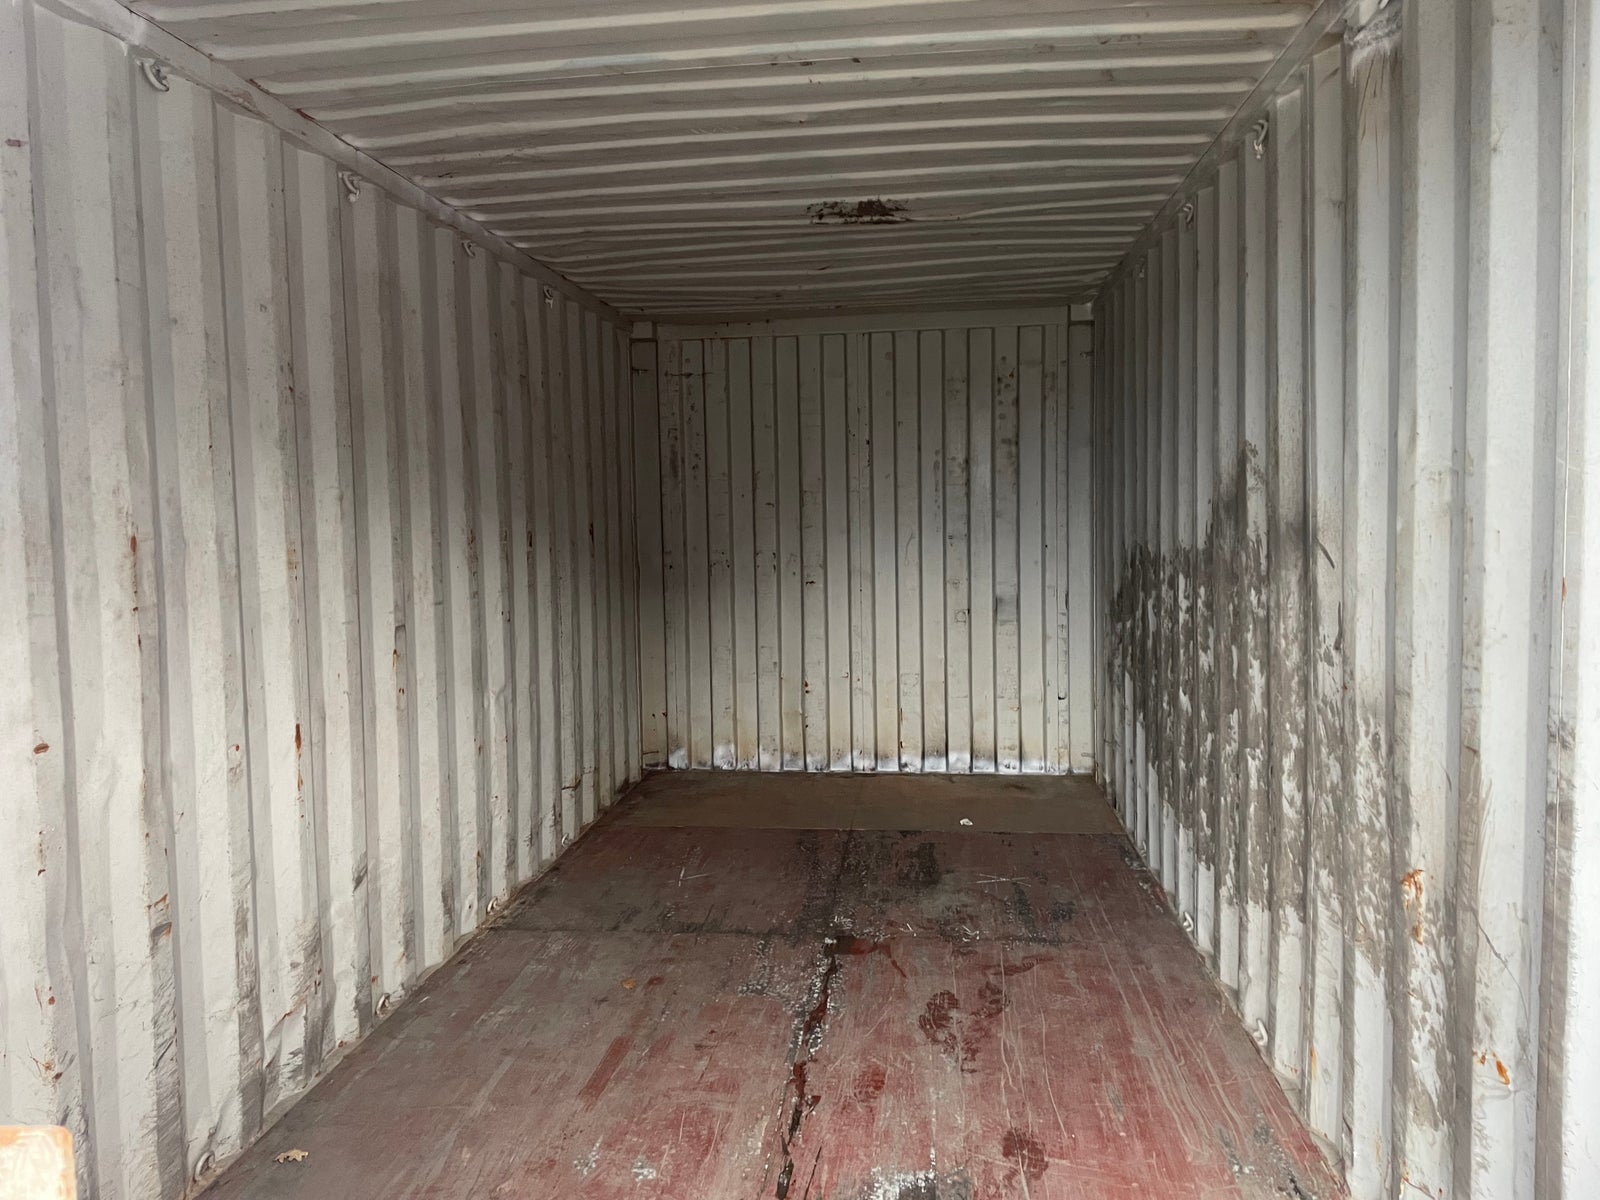 20 fods Container - ID: CRXU 342945-0